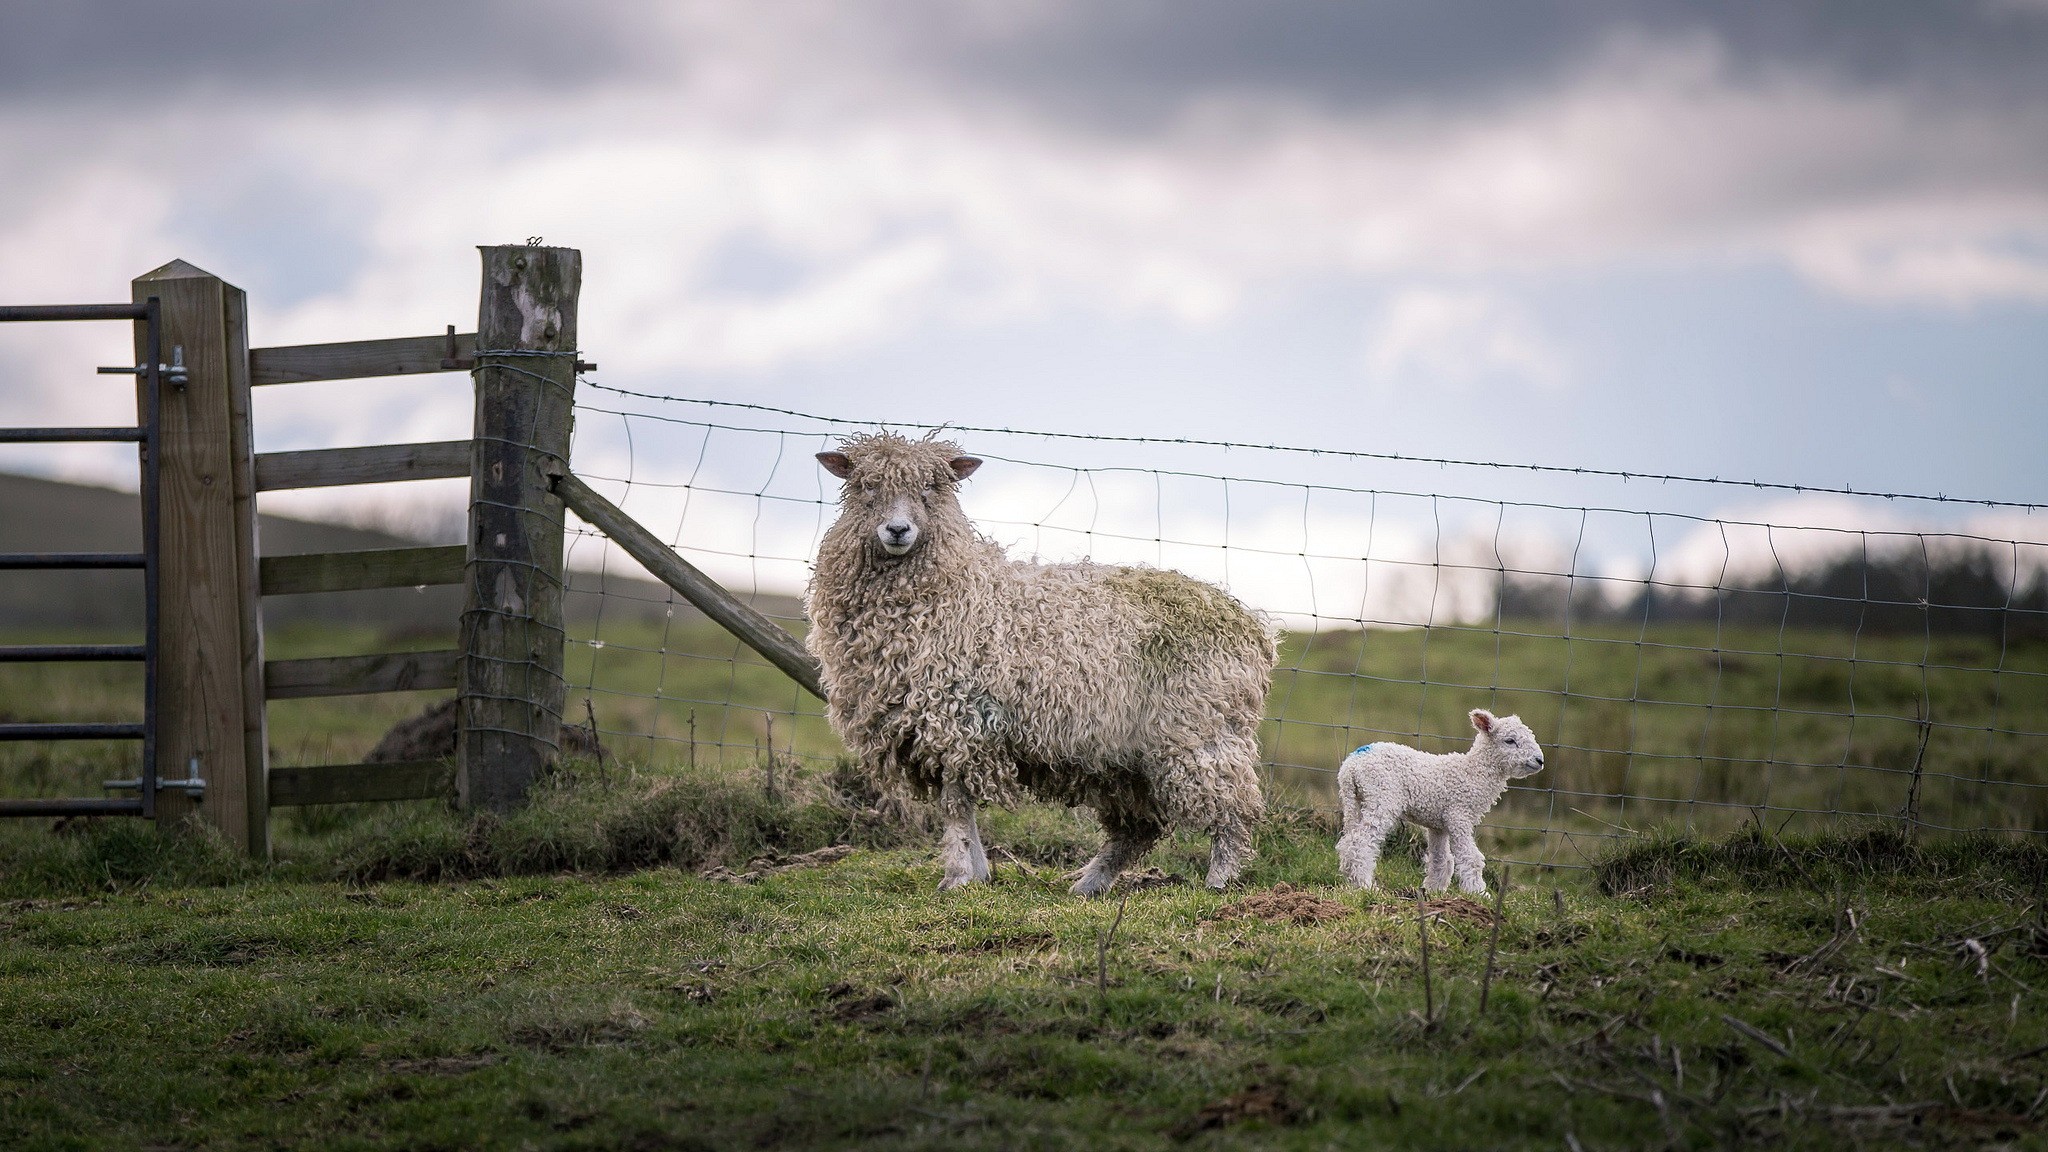 General 2048x1152 animals sheep fence lamb baby animals mammals outdoors